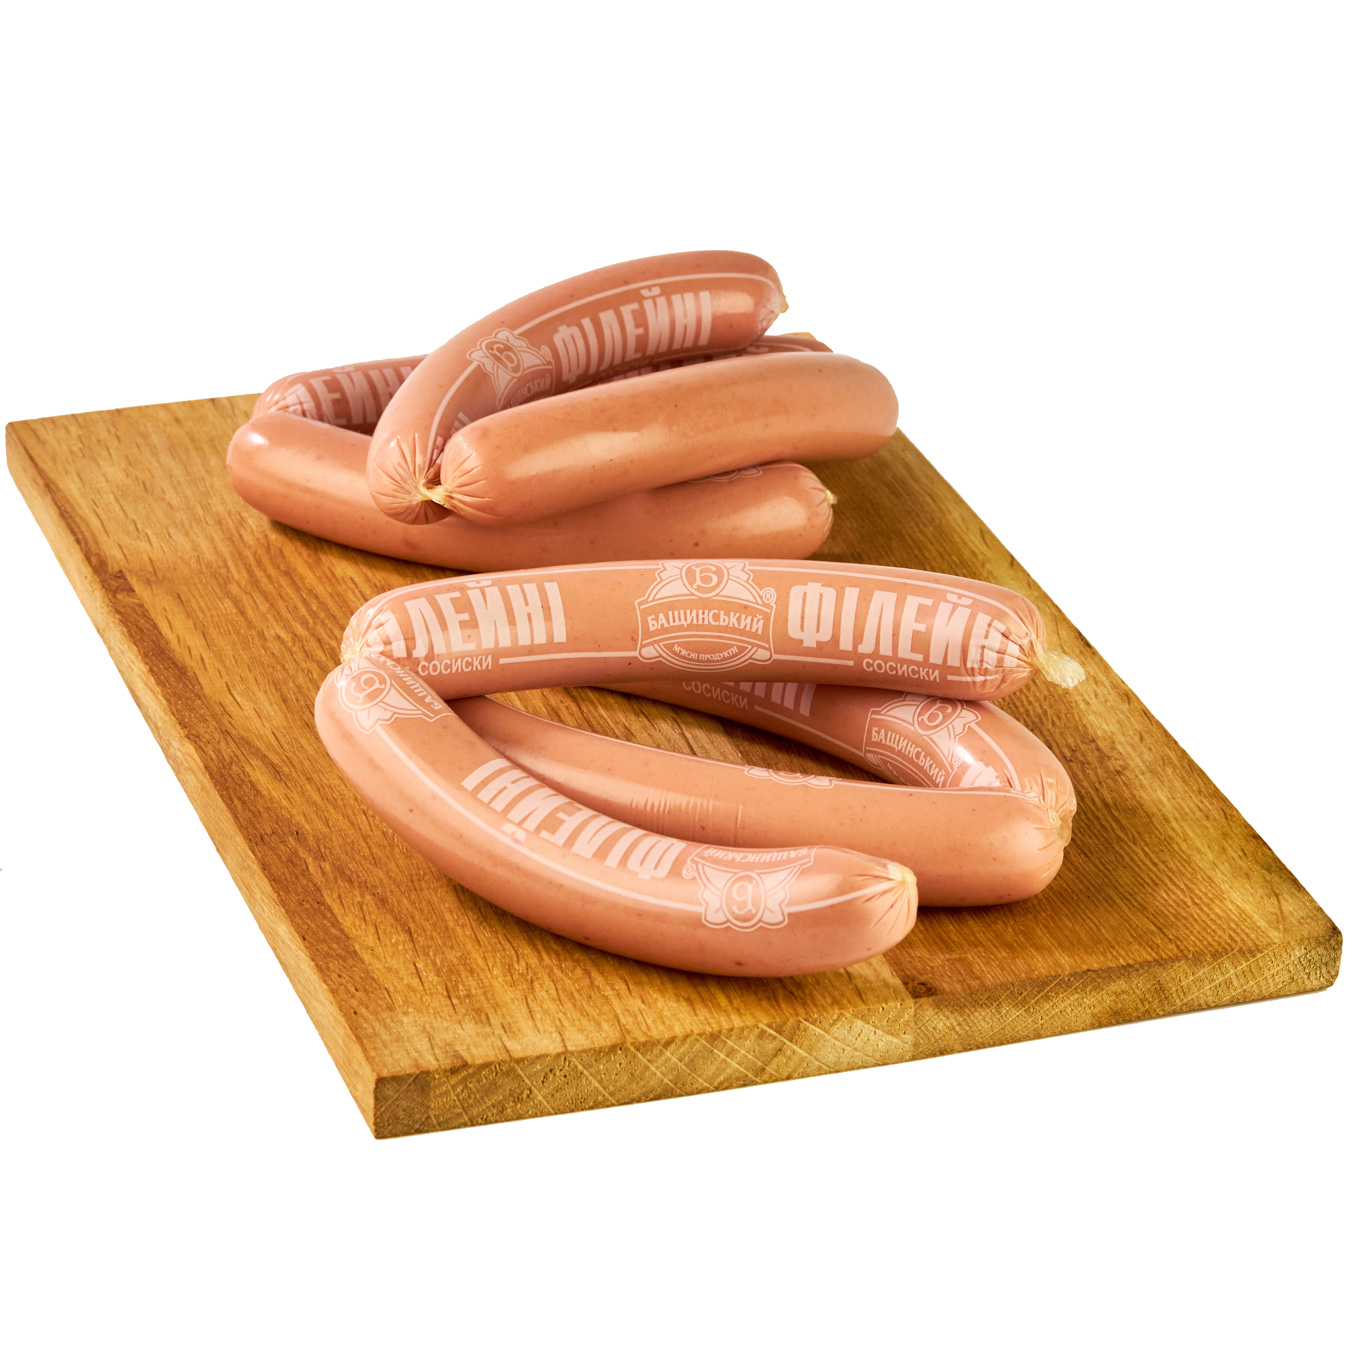 Baschinskyi Fileyni Boiled Sausages